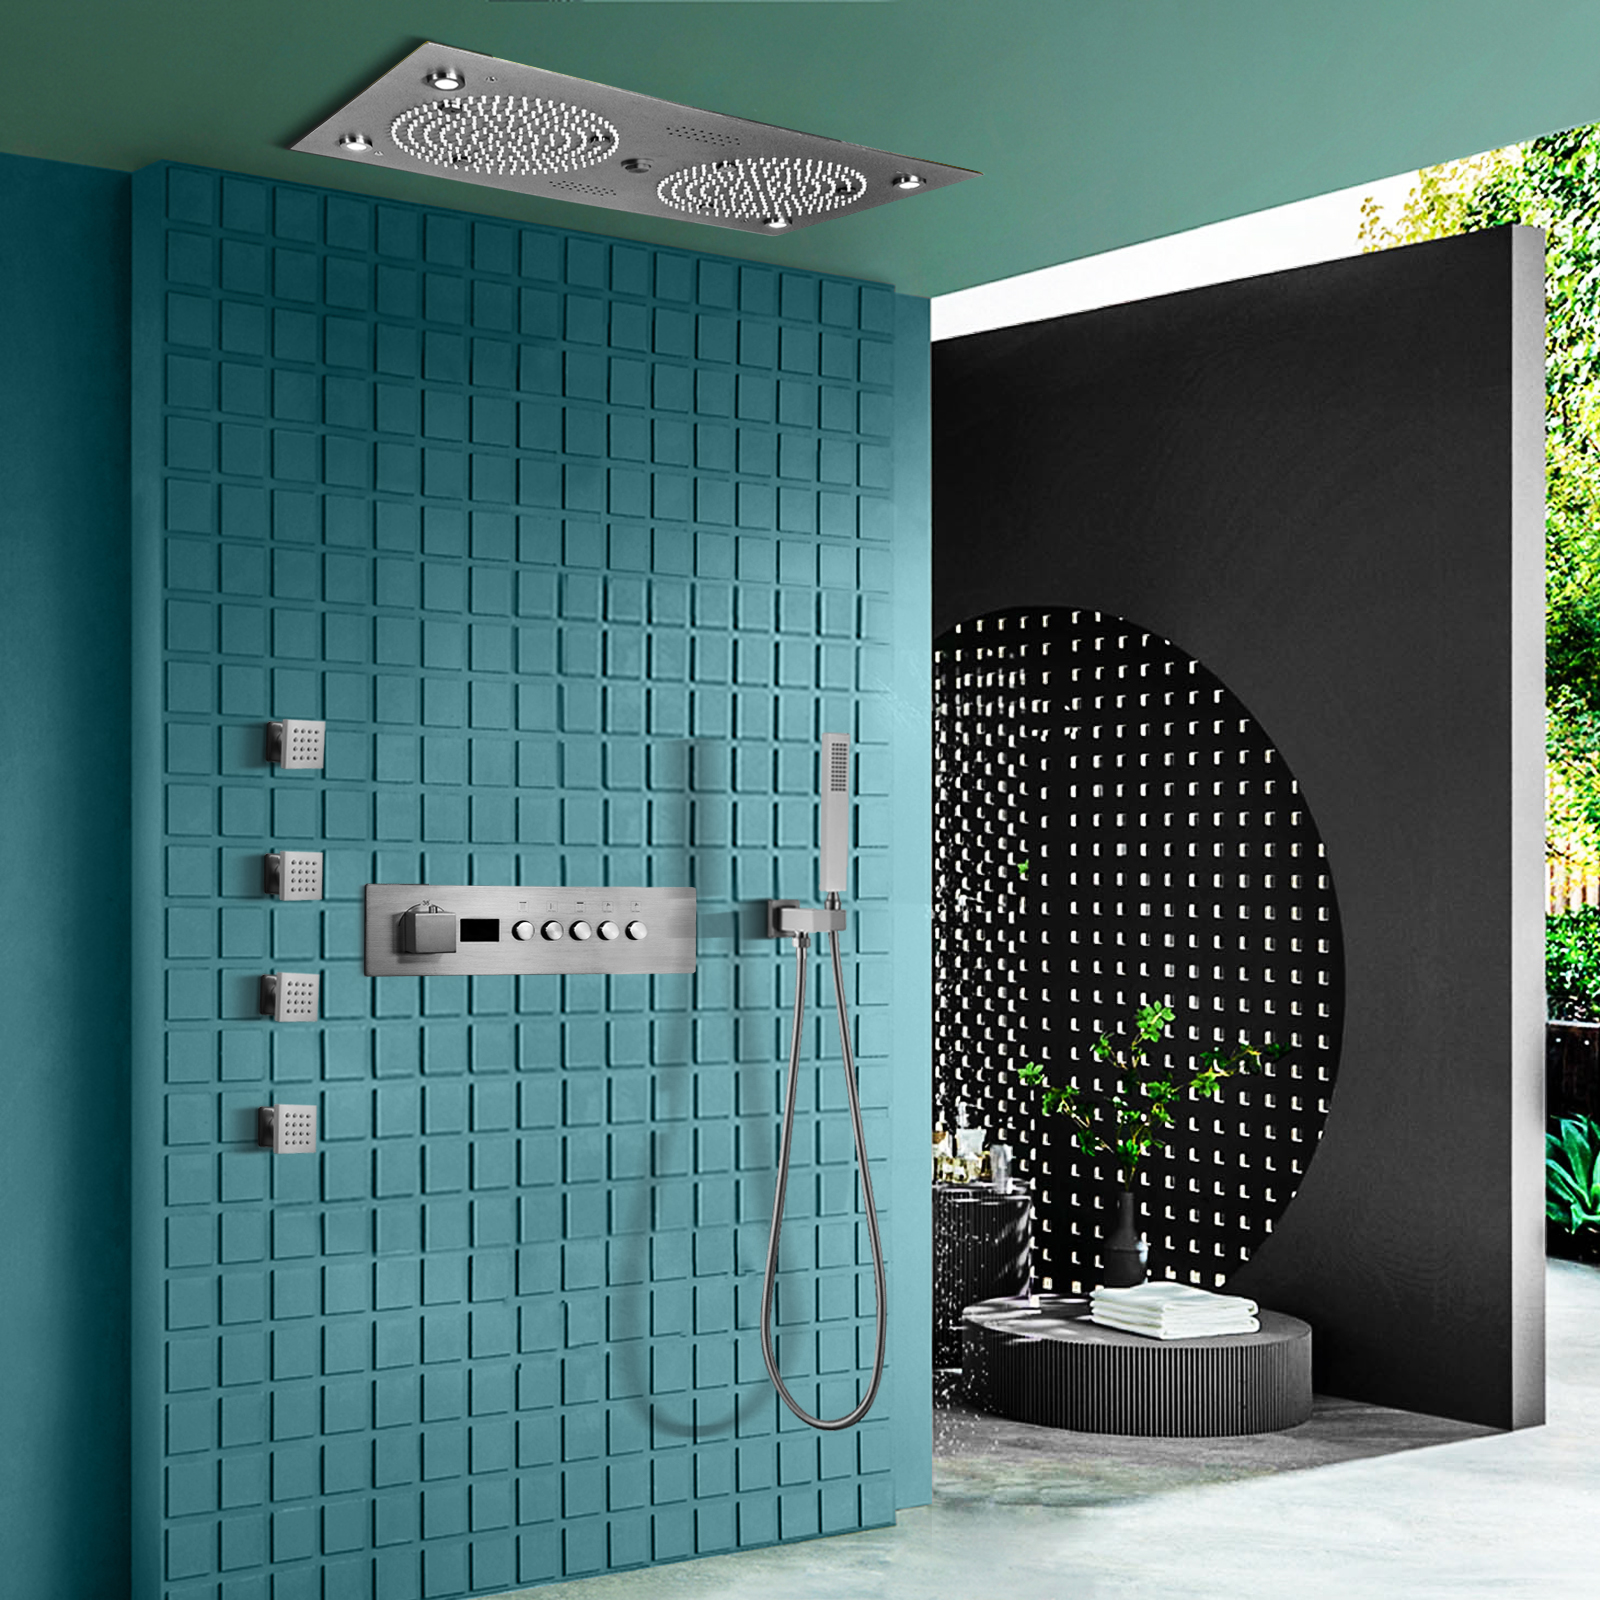 Gorros de ducha con música LED de 24,5x12,5 pulgadas, gorros de ducha con temperatura instantánea, muestra de temperatura, pilar de agua de madera seca